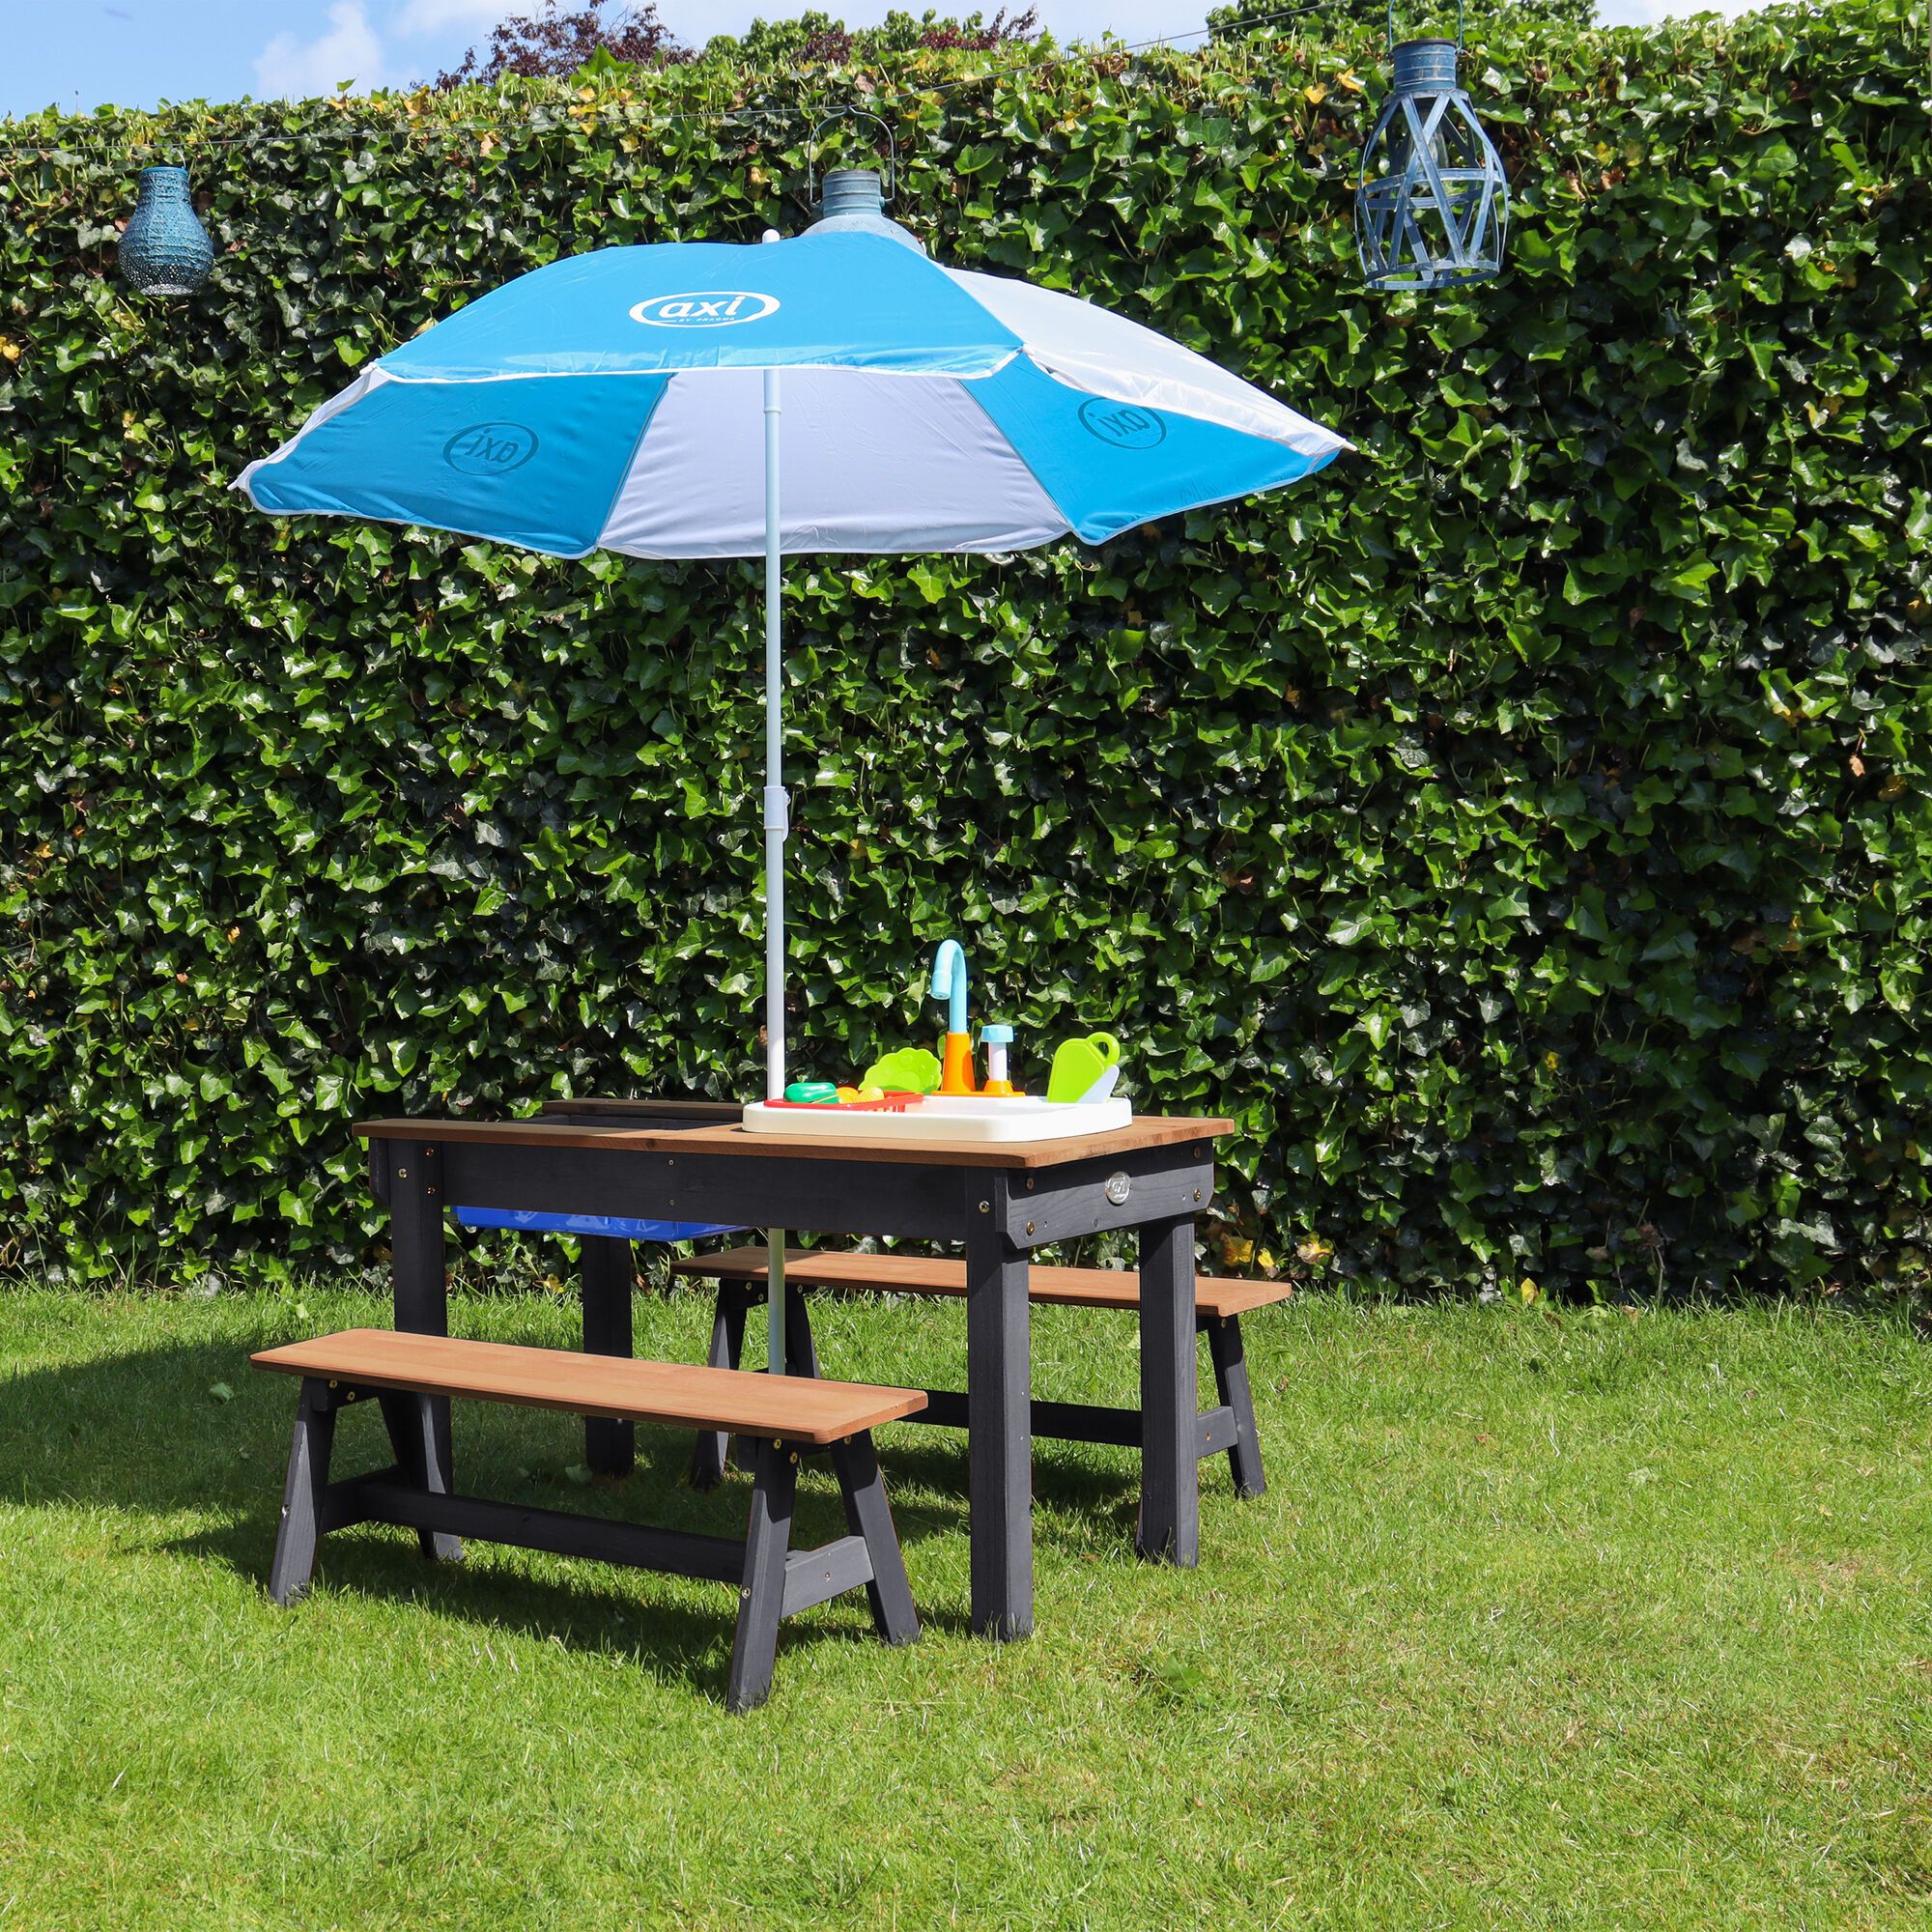 AXI Dennis Zand & Water Picknicktafel met Speelkeuken wastafel en losse bankjes Antraciet/bruin - Parasol Blauw/wit